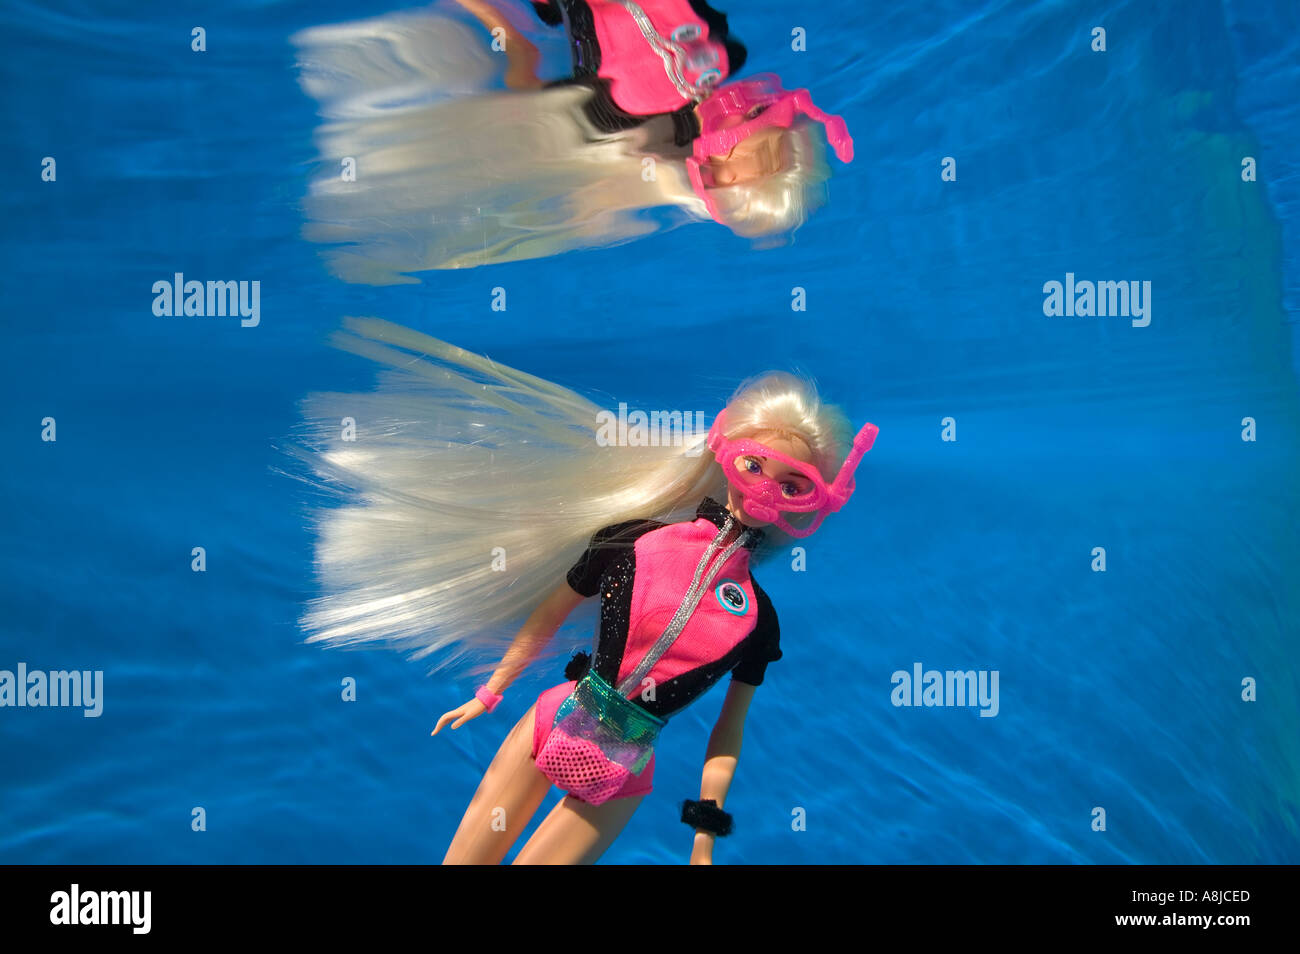 Barbie underwater in cavern like environment Stock Photo - Alamy